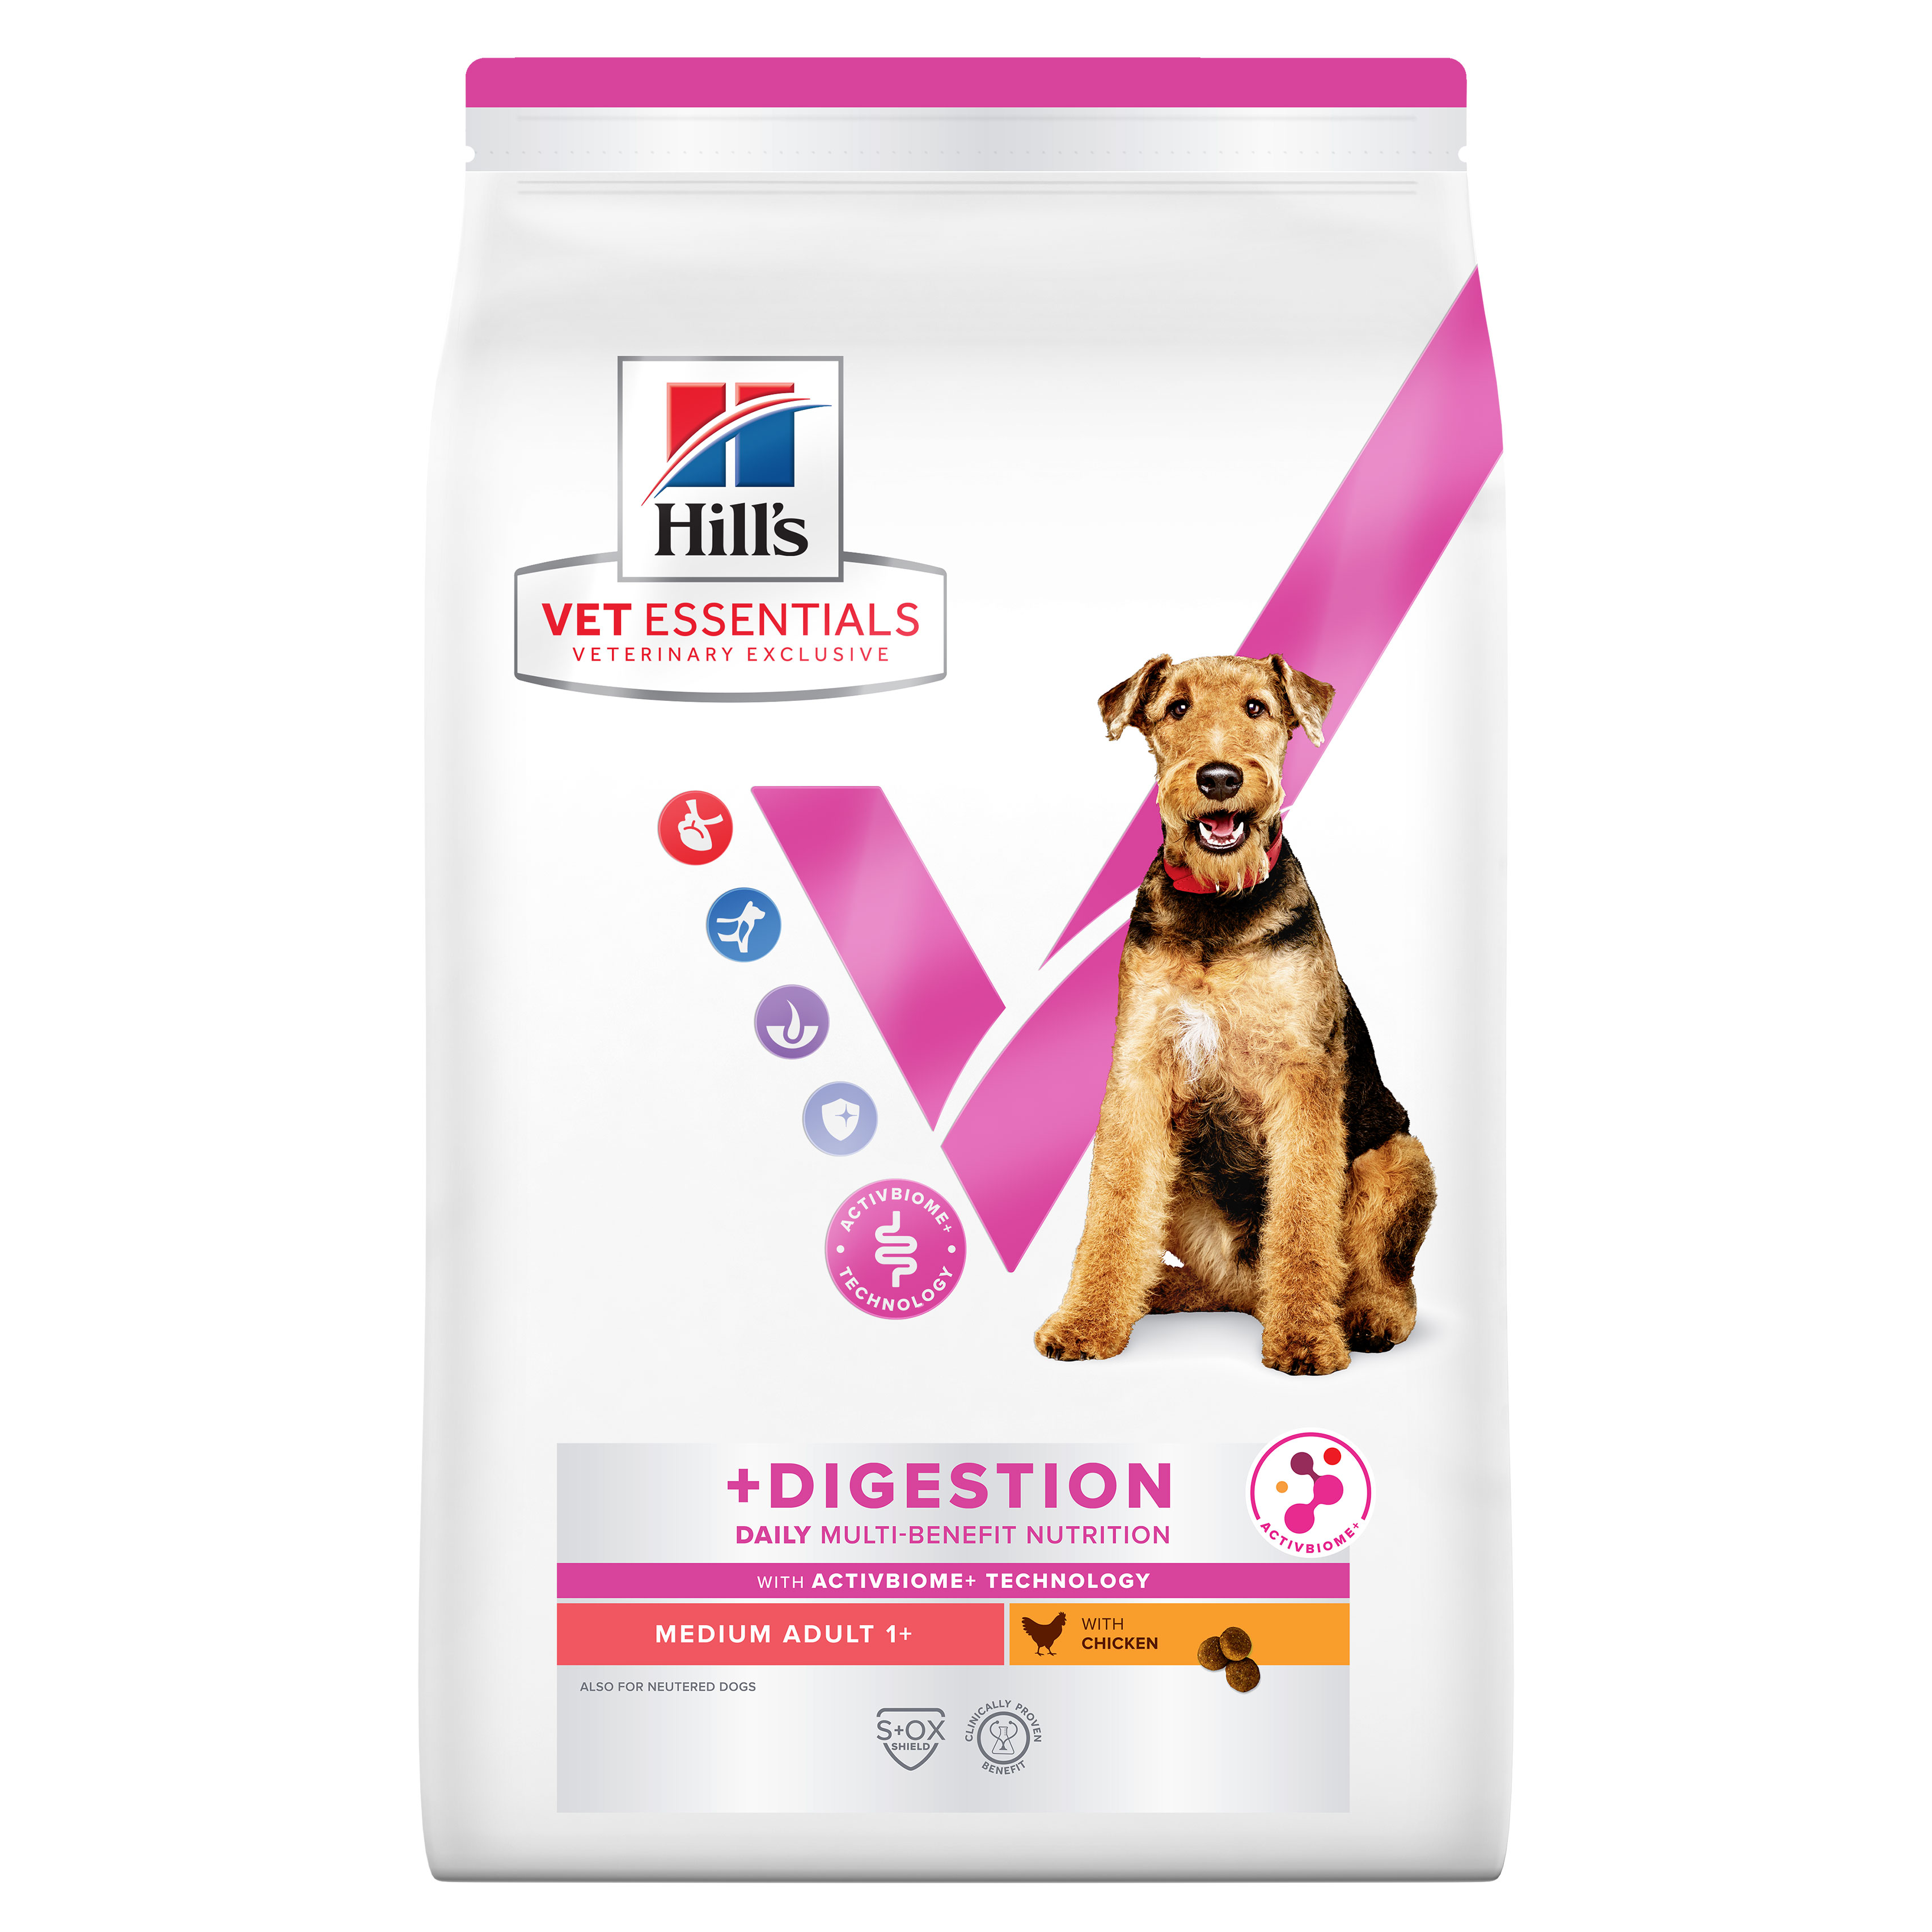 Hill's Vet Essentials מולטי בנפיט כלב בוגר גזע בינוני, בריאות העיכול, 10 ק"ג